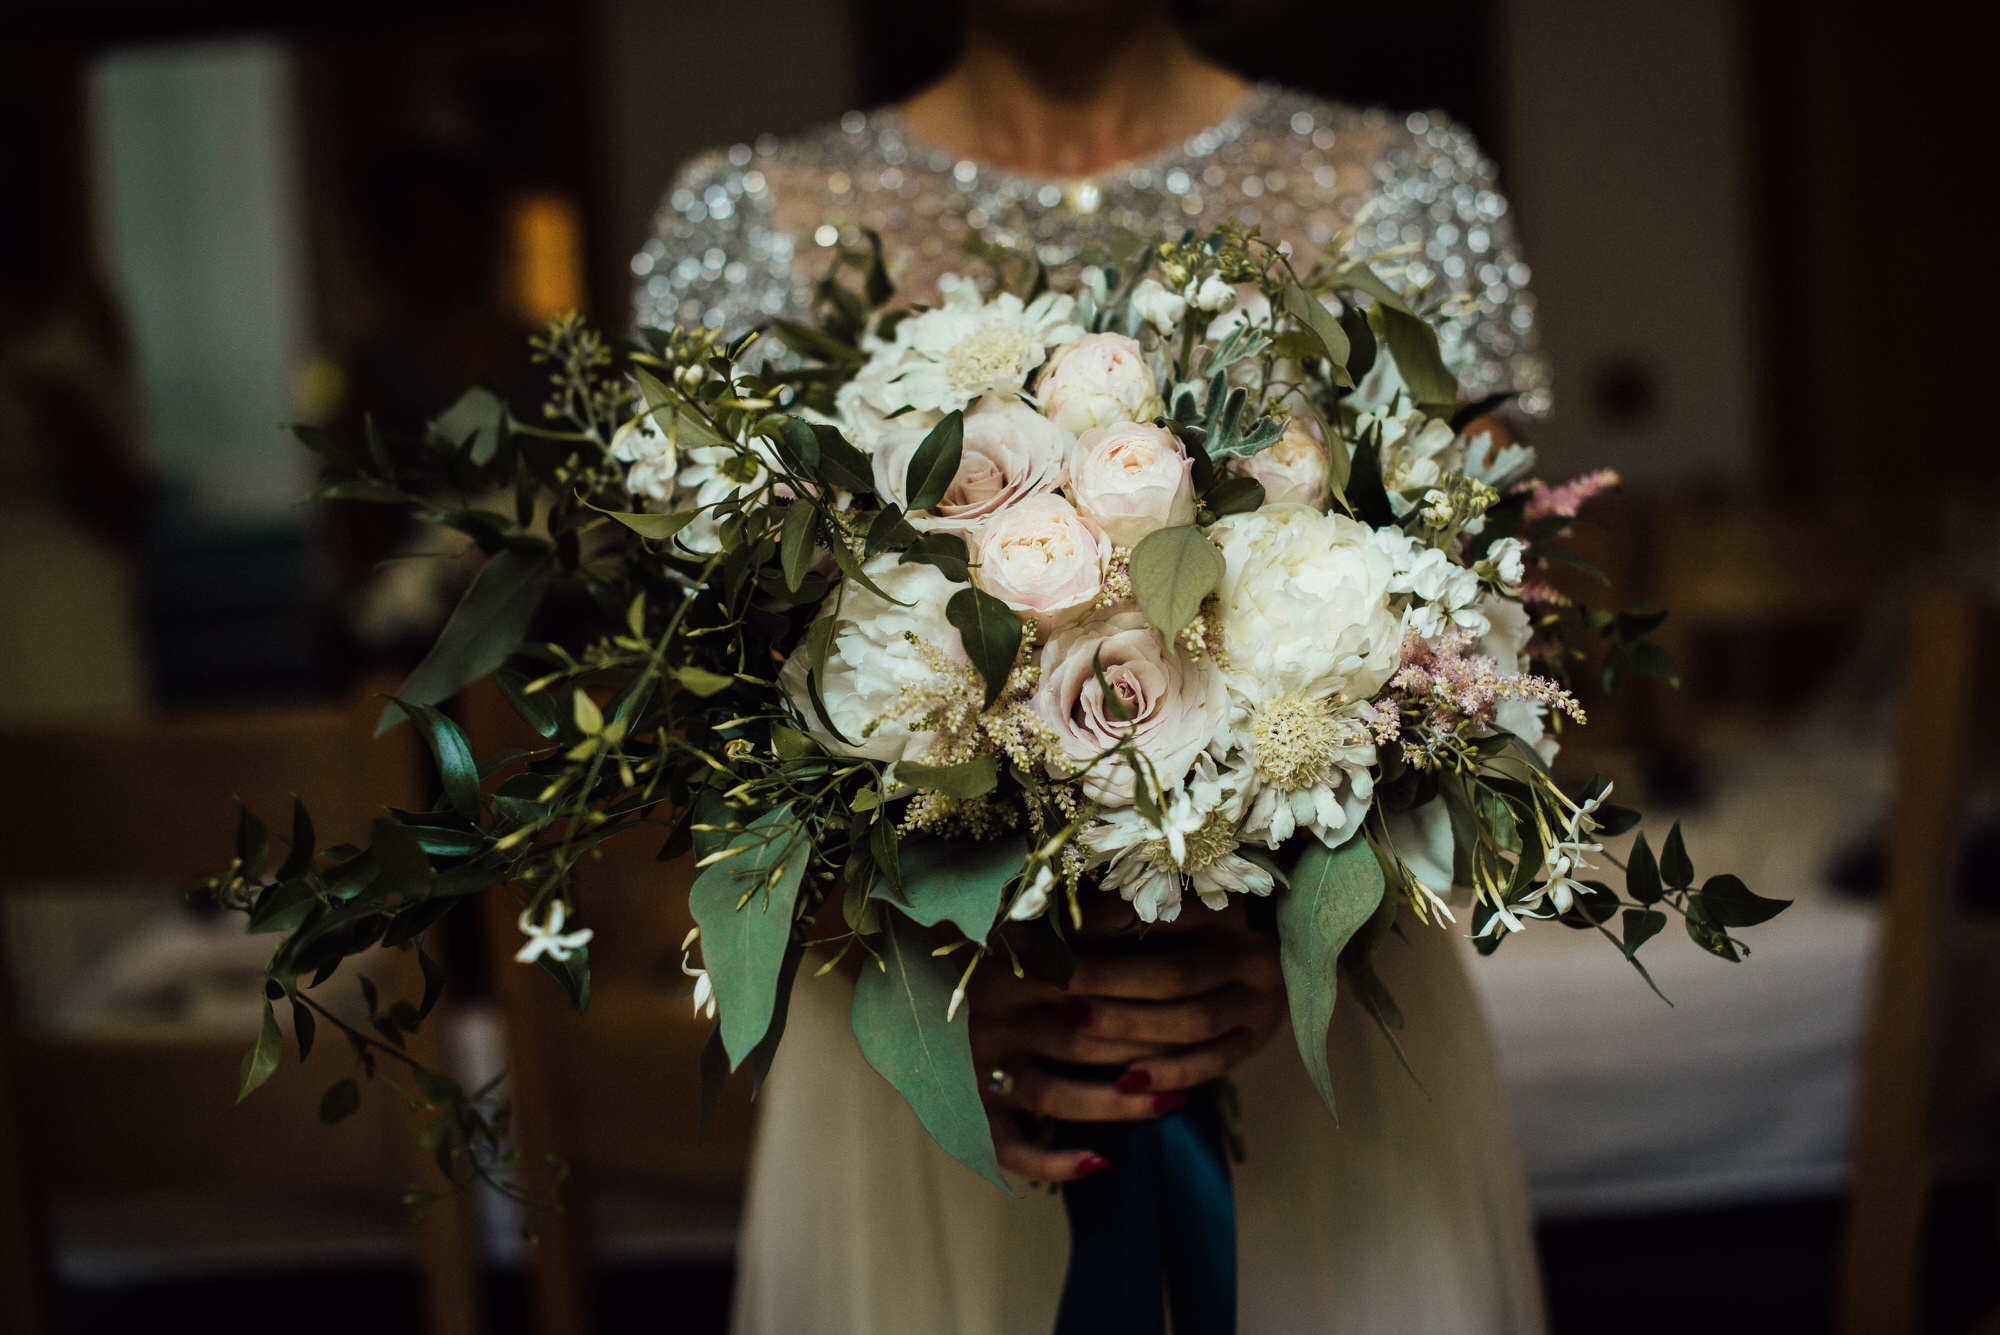 Jenny Packham wedding dress, blush bouquet, alternative wedding photographer, creative wedding photography